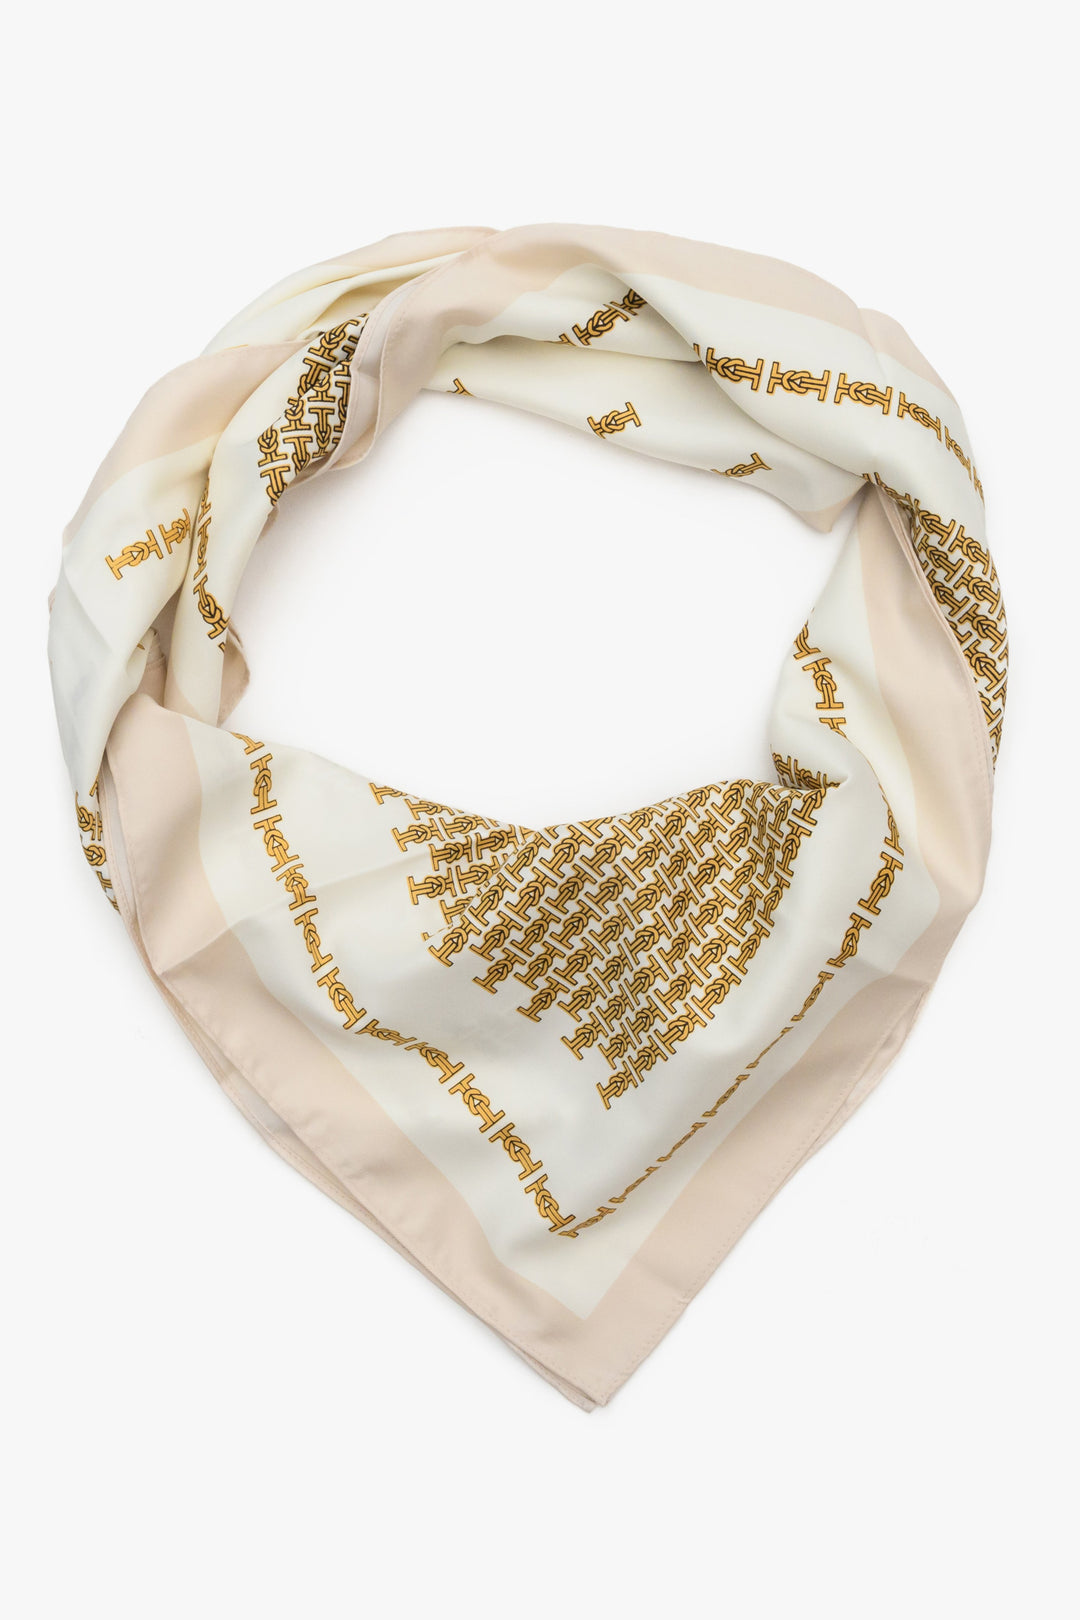 Women's neckerchief in a nautical pattern by Estro.